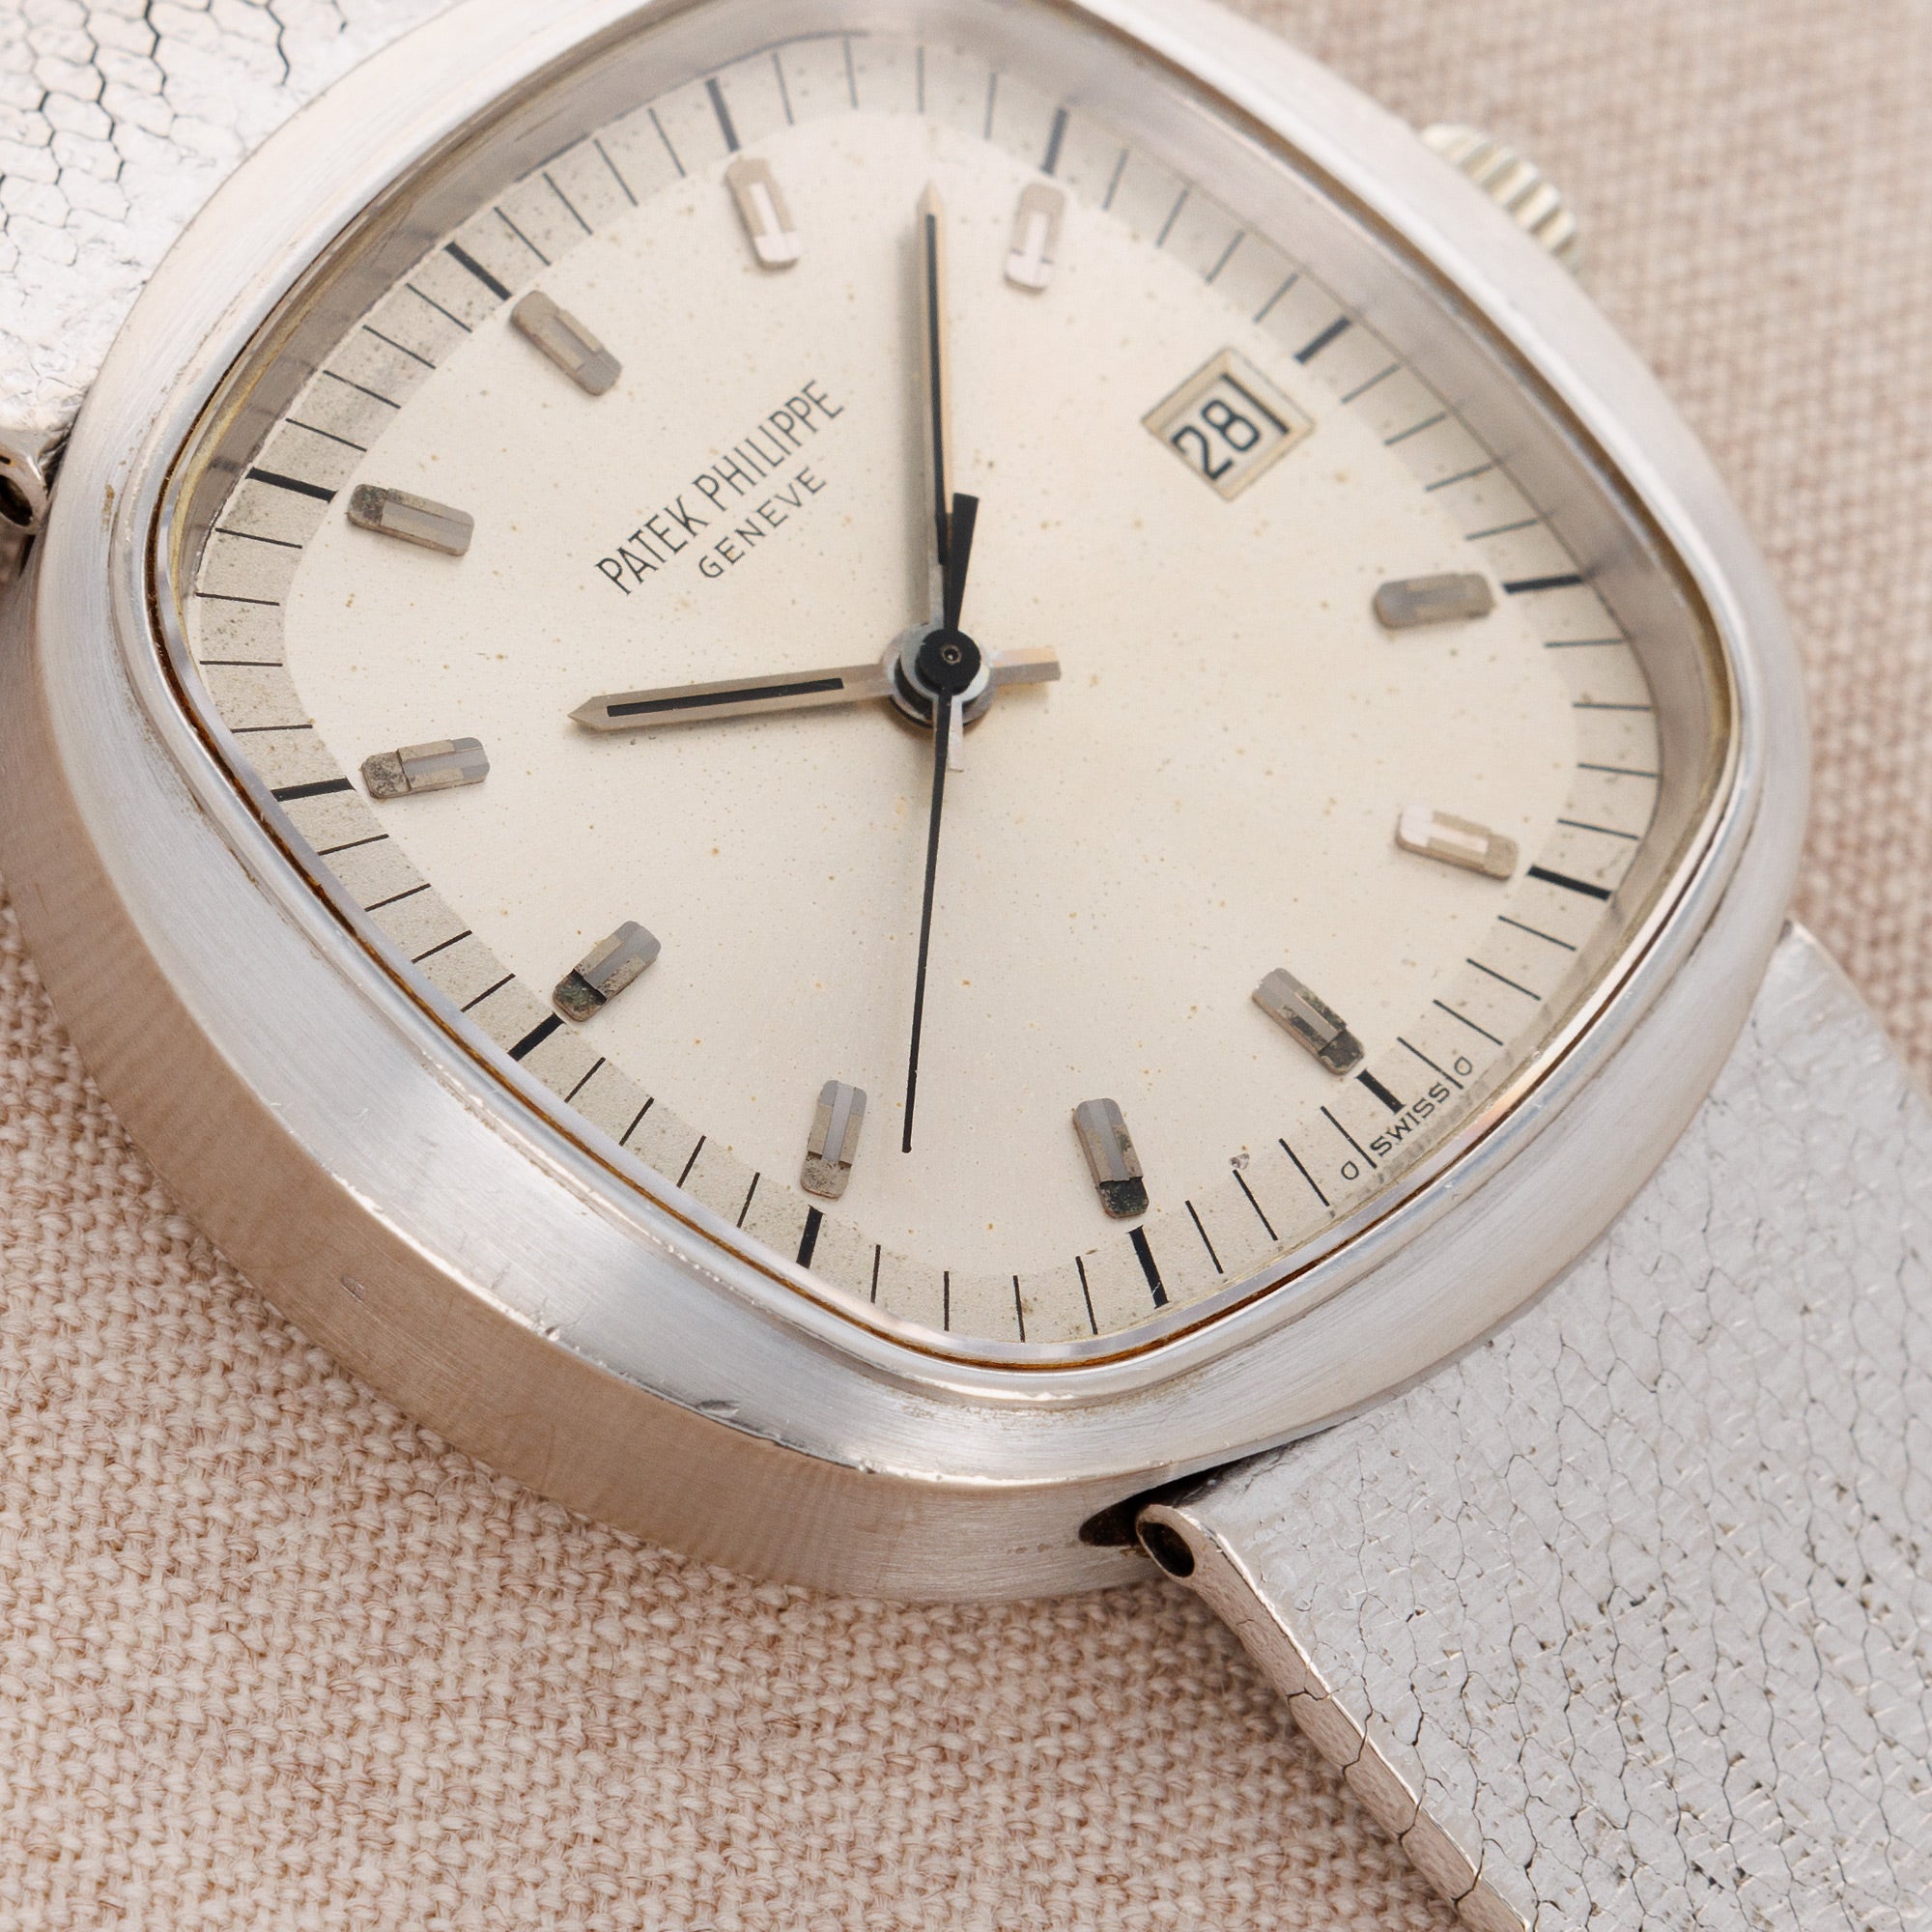 Patek Philippe White Gold Beta 21 Watch Ref. 3597